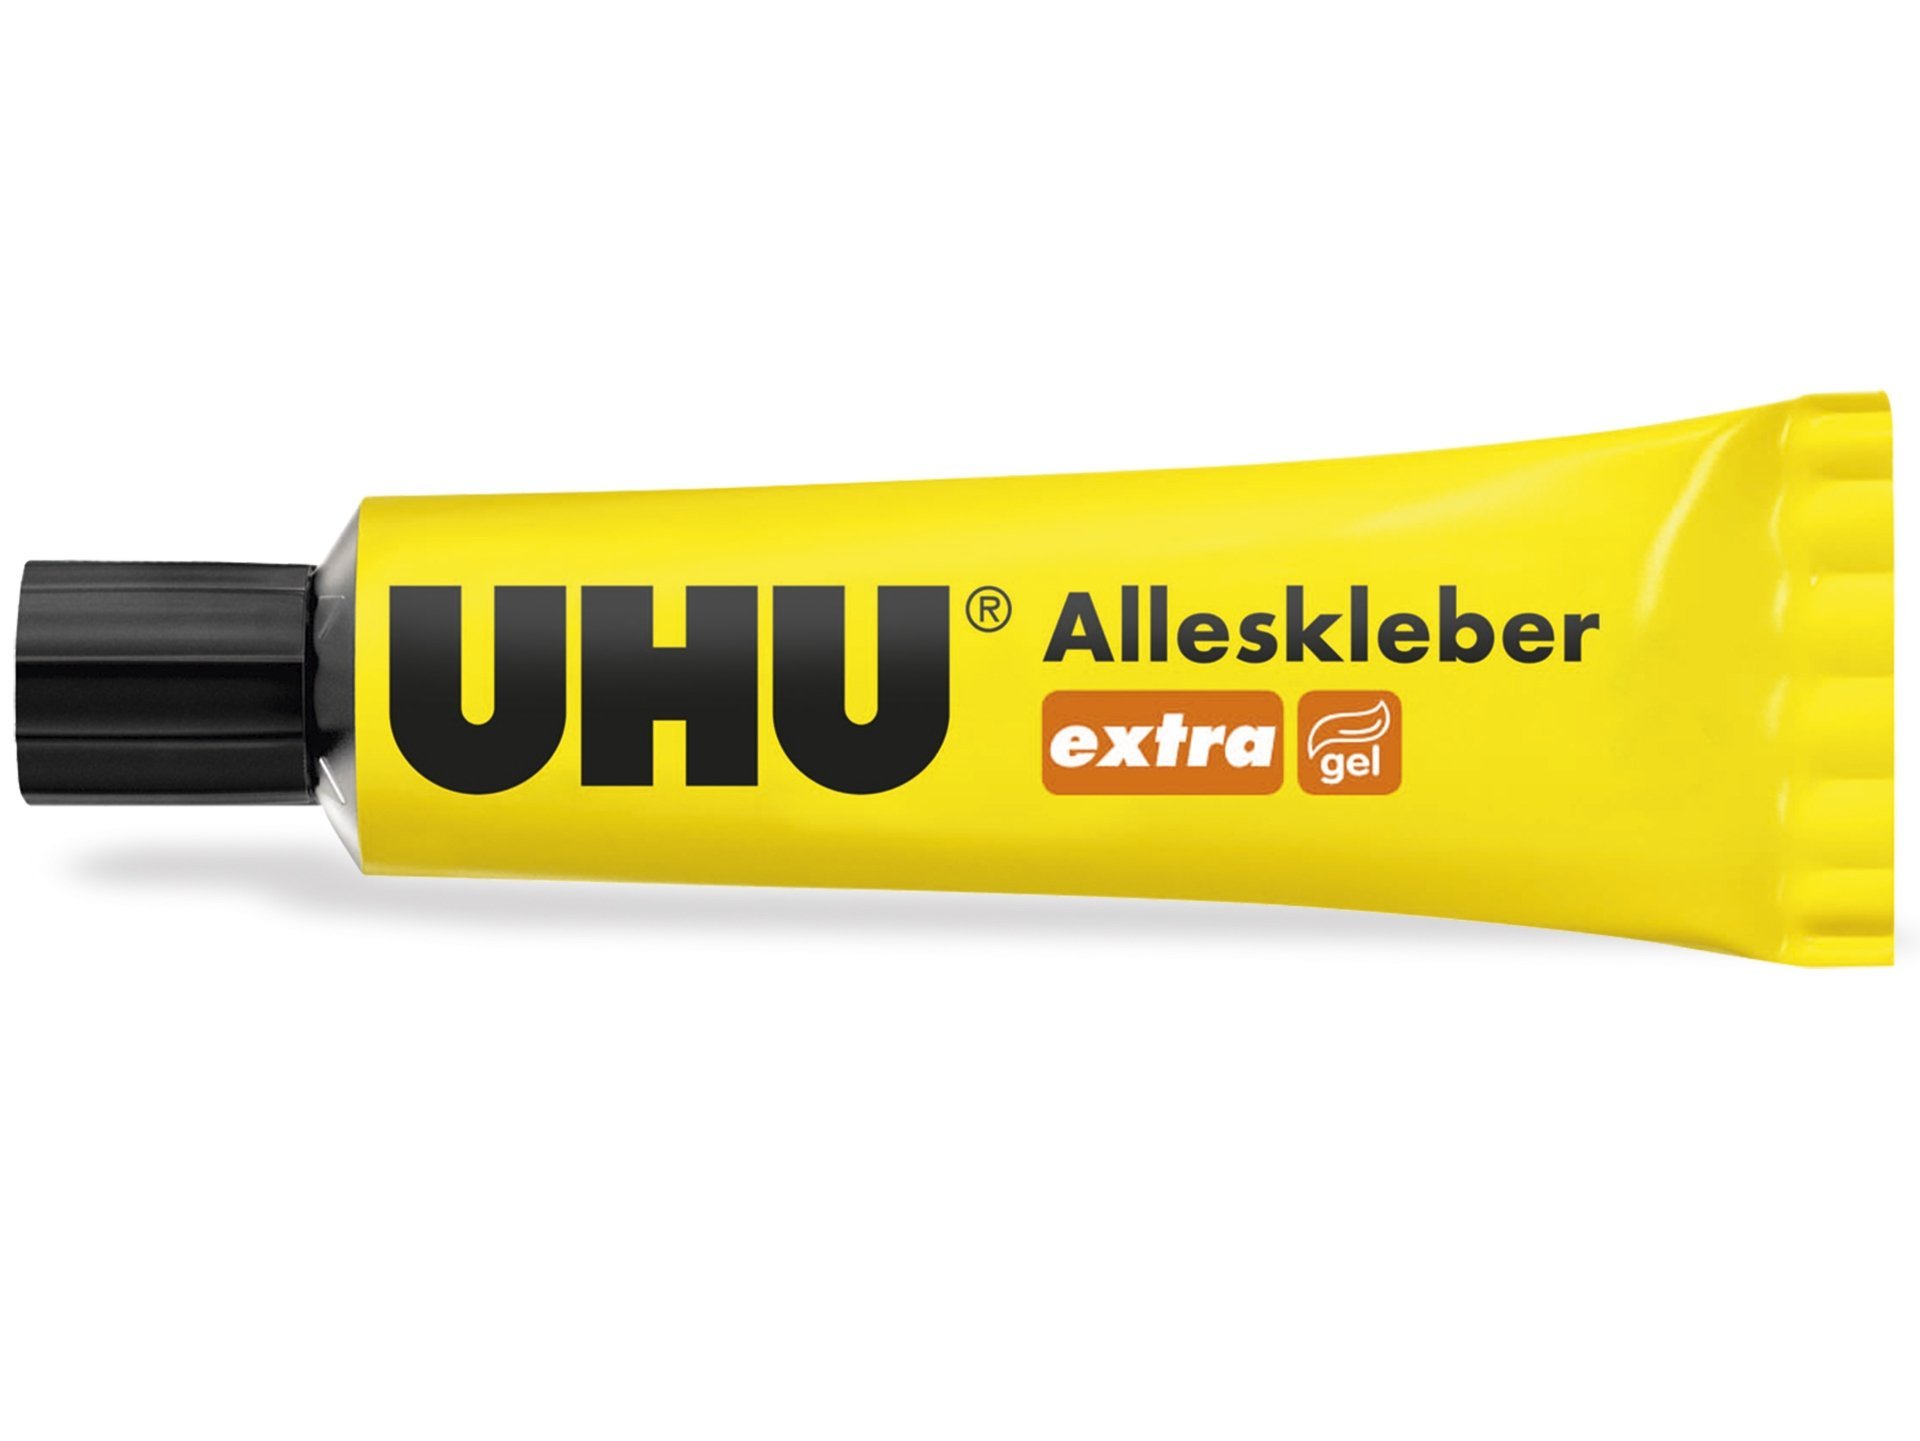 Caja de adhesivo para todo tipo de usos UHU 125 ml [Pack de 5 tubos]